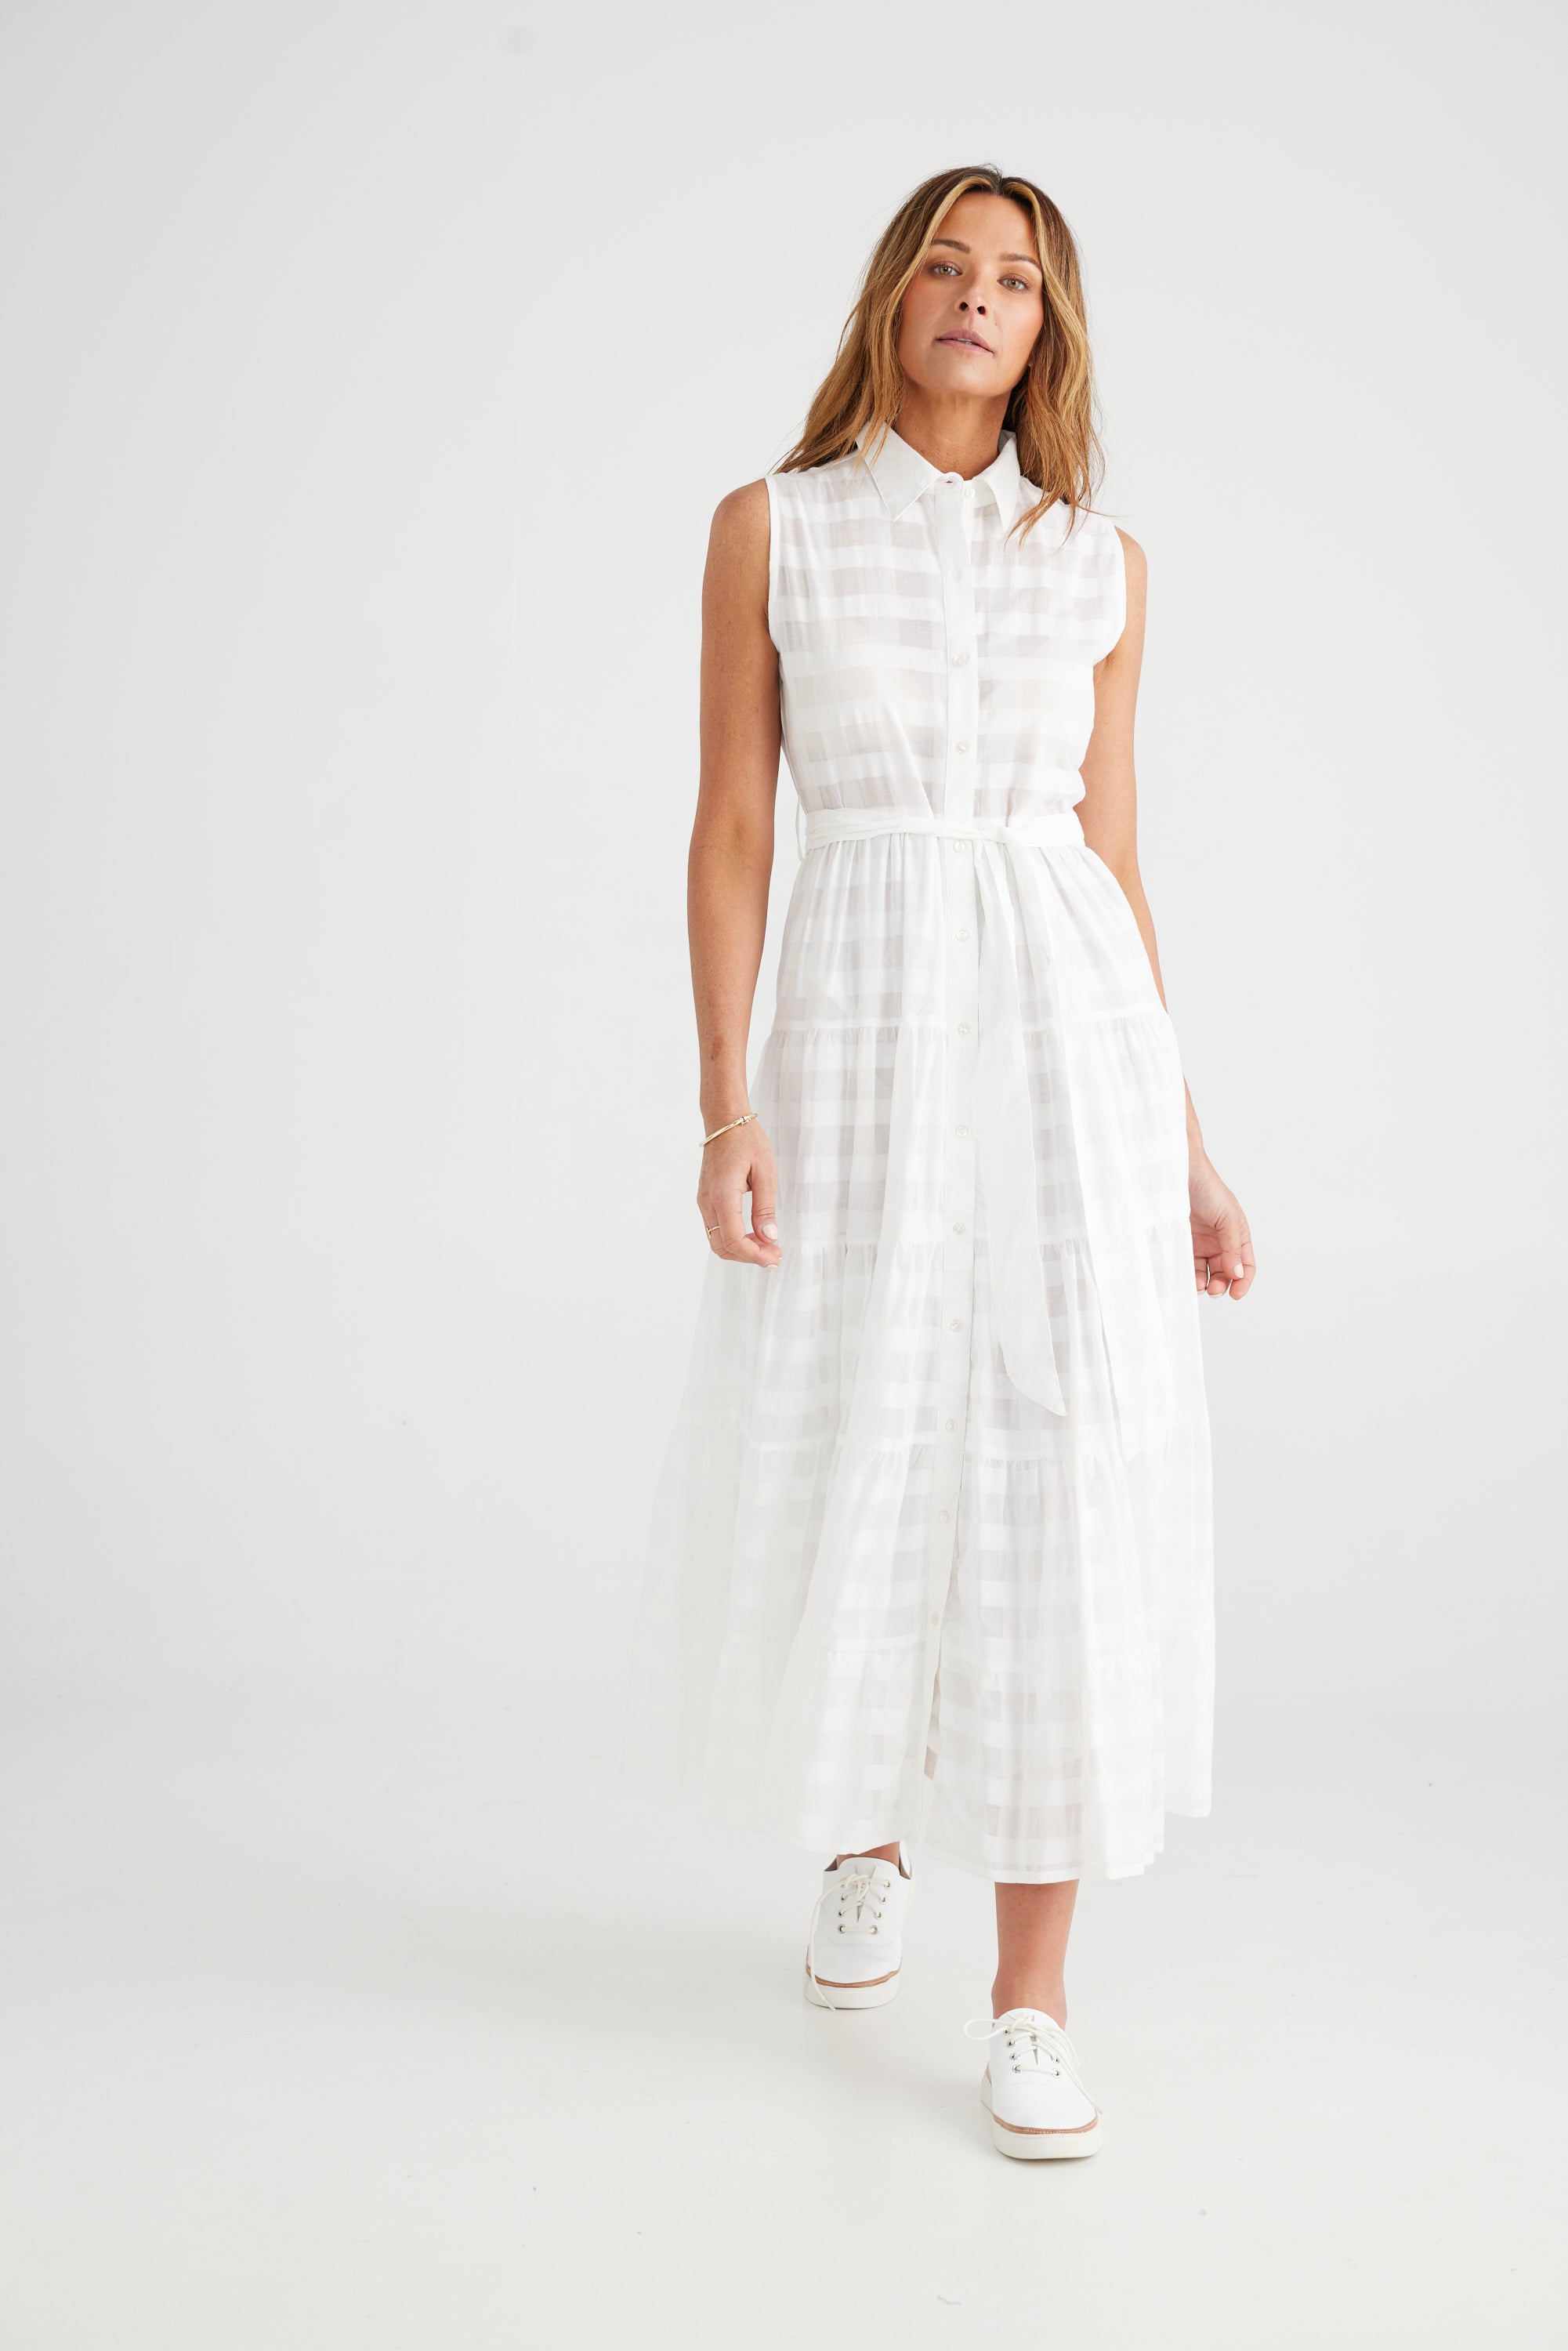 Poppy Maxi Dress - White Window Check-Dresses-Brave & True-The Bay Room